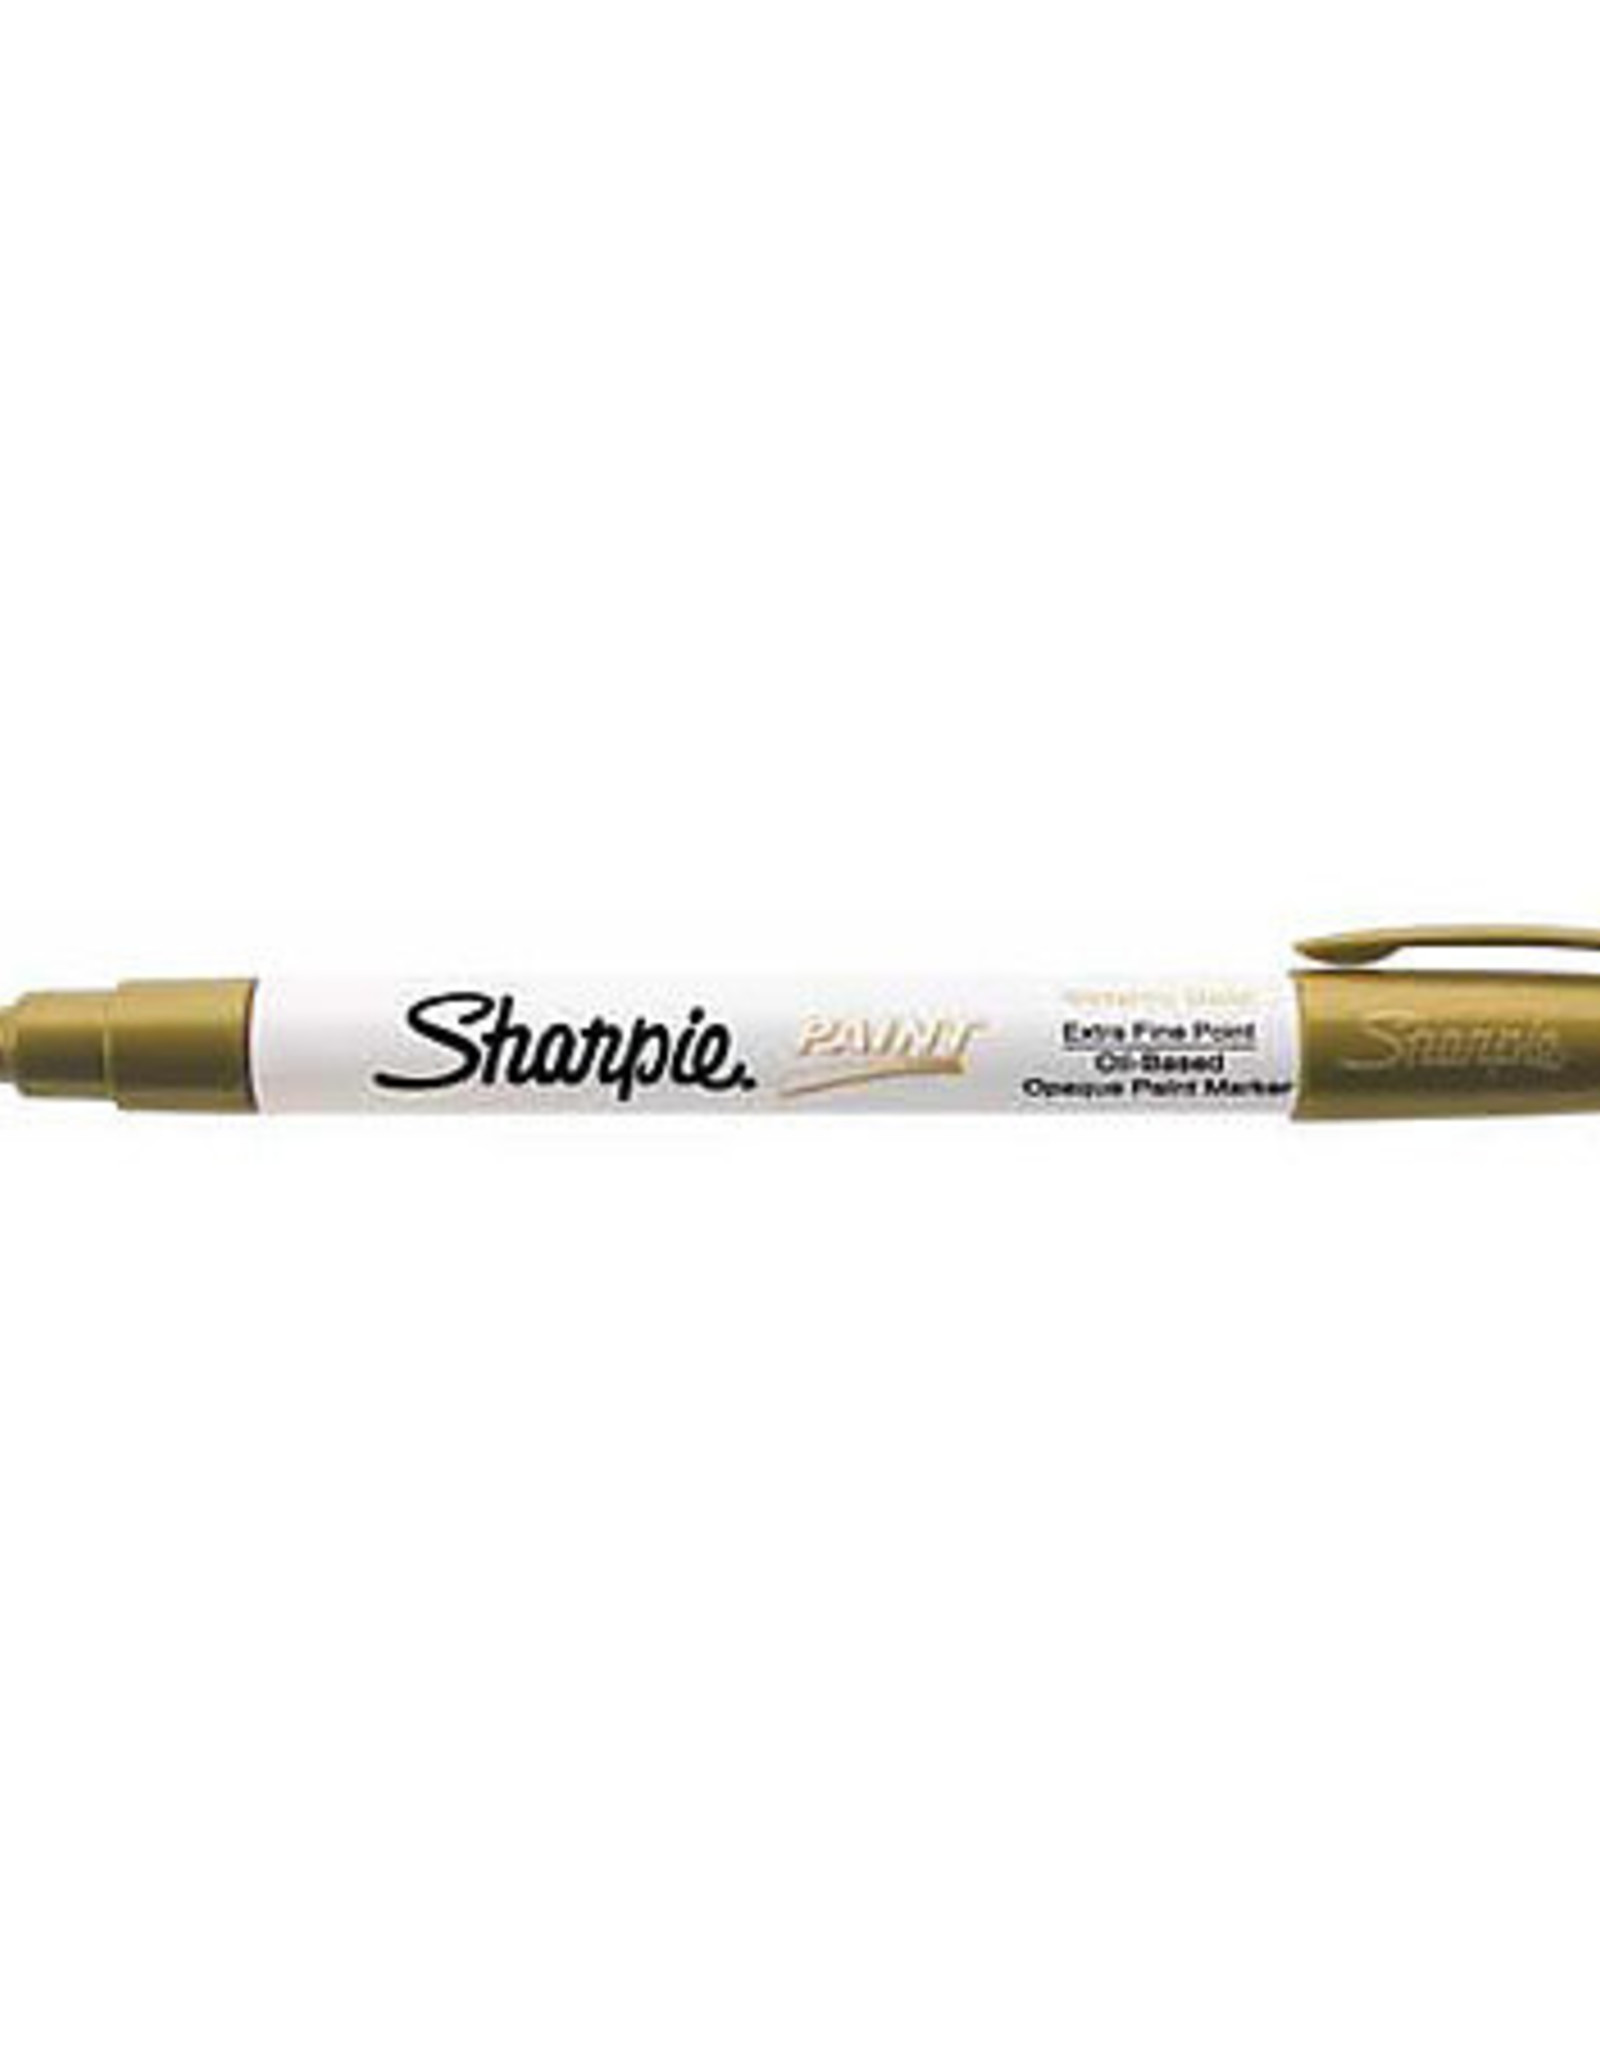 Sharpie Sharpie Oil Paint Markers